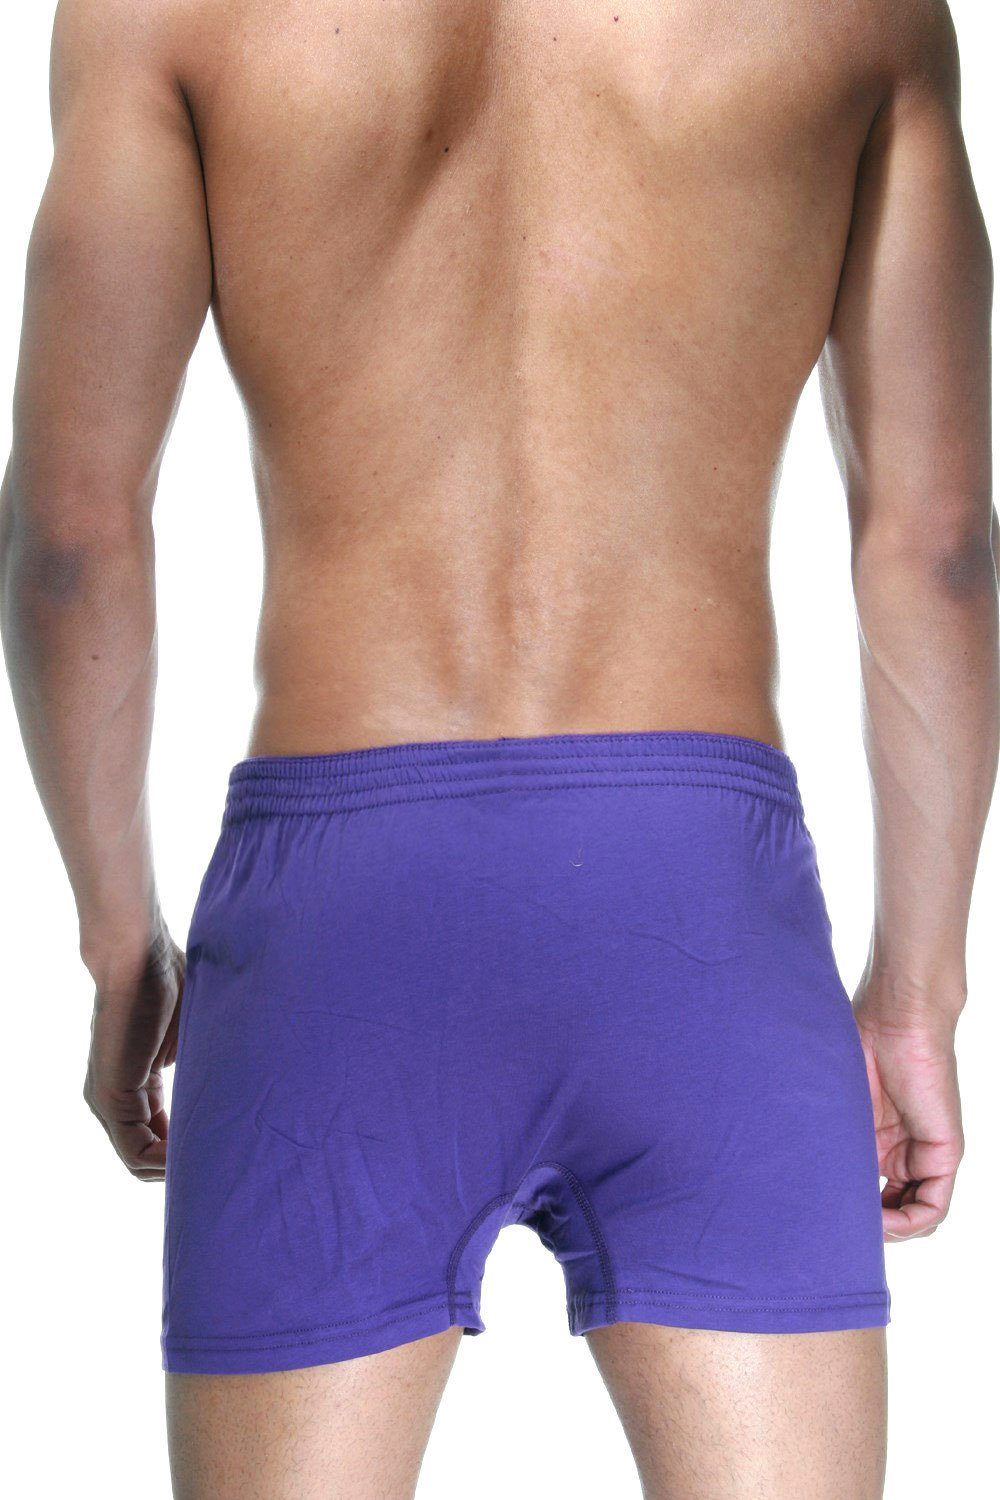 DOREANSE Boxershorts purple